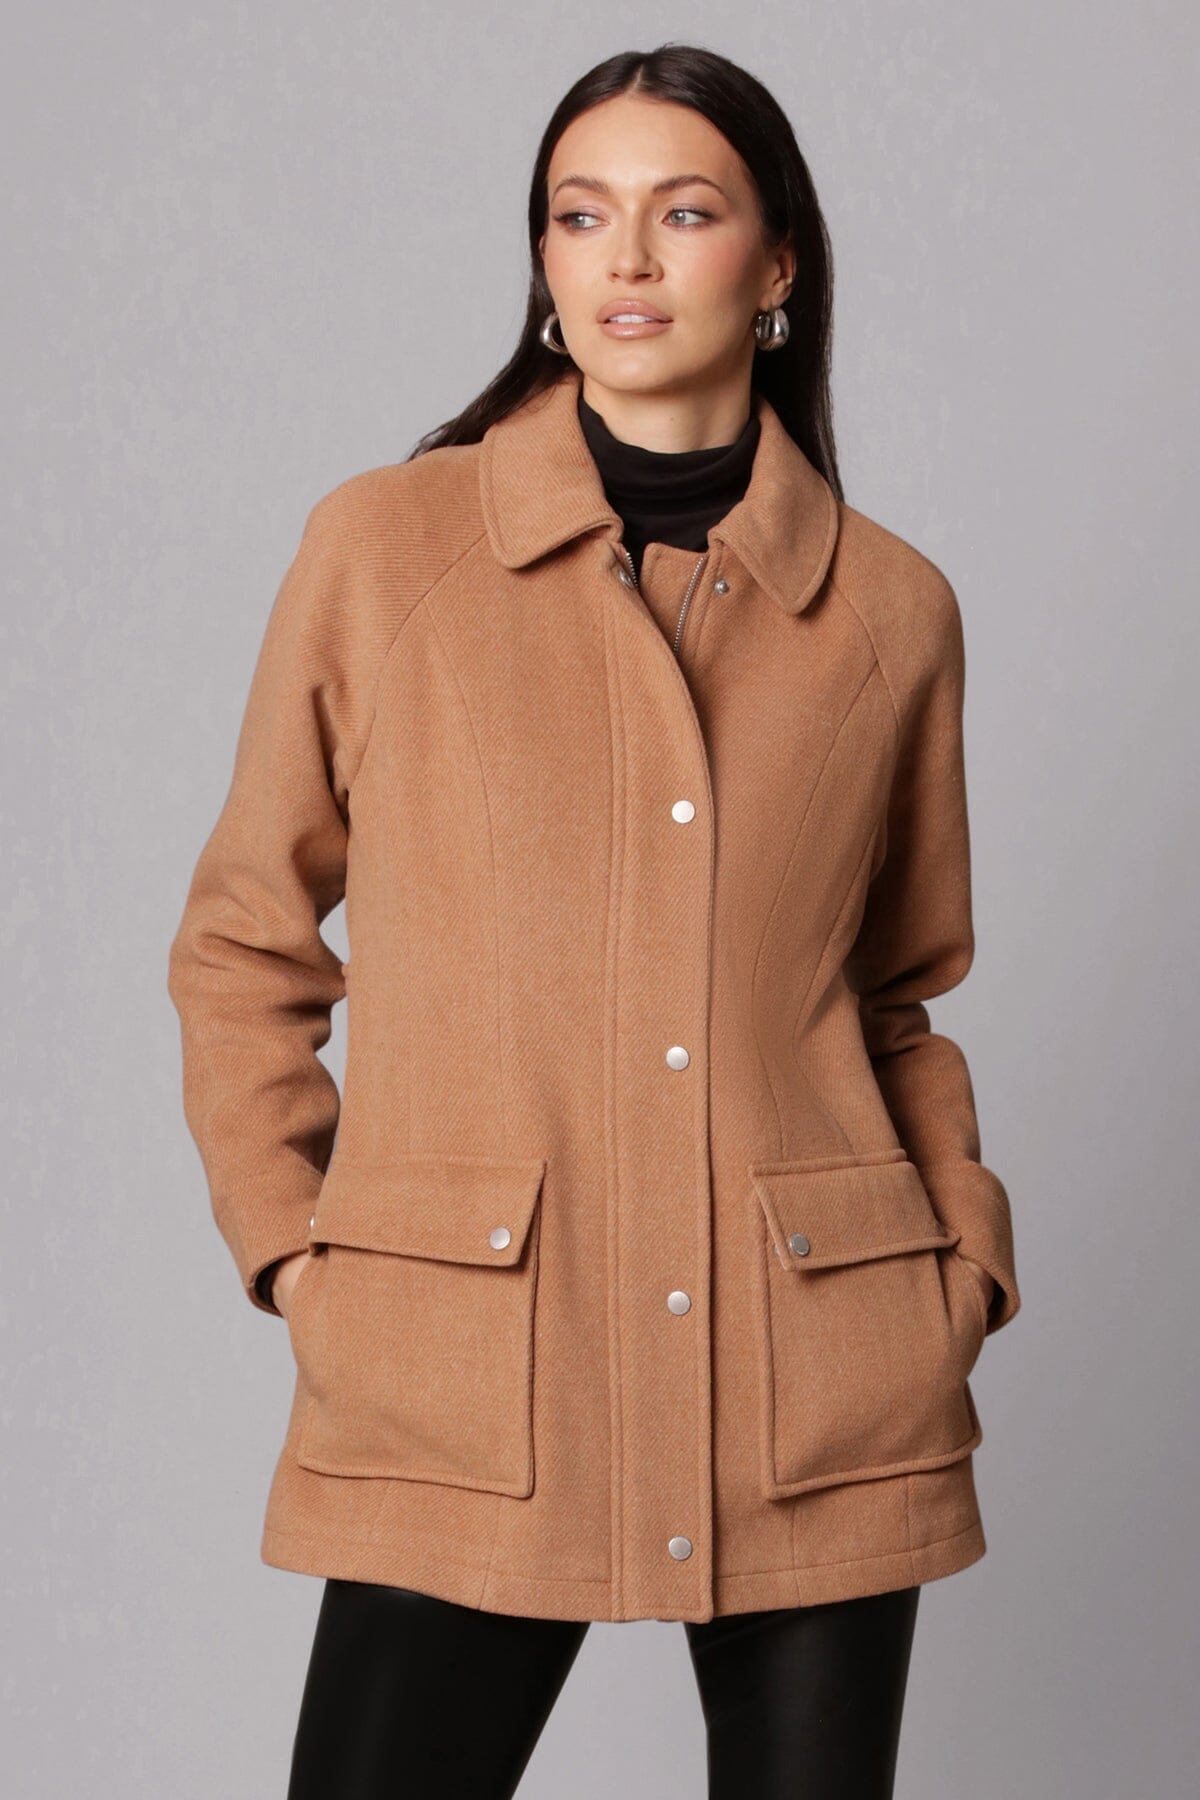 Light brown twill wool blend zip-front jacket coat outerwear - women's figure flattering street style jackets coats for fall 2023 fashion trends